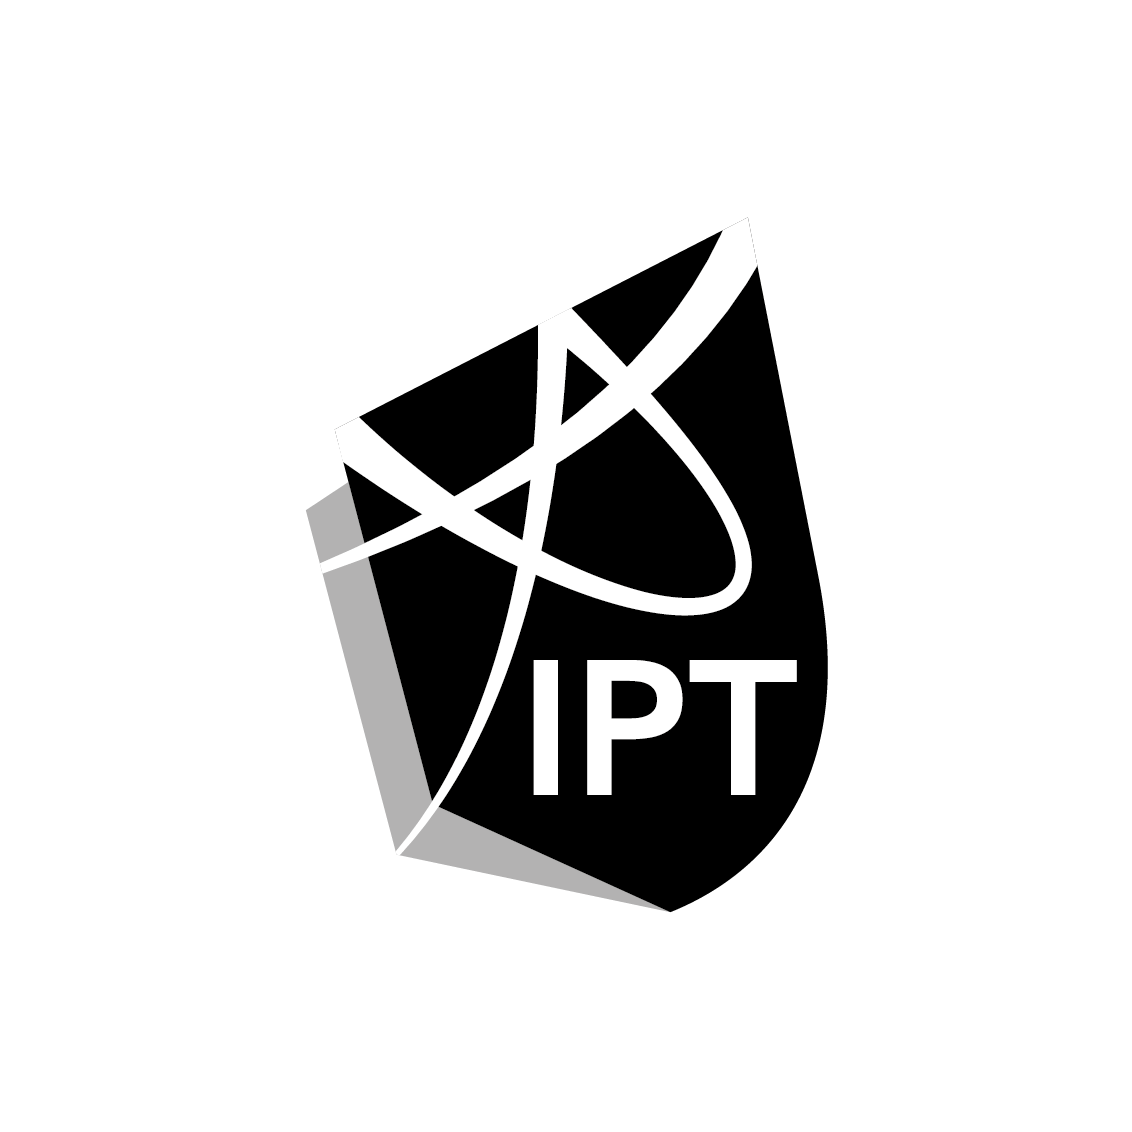 Cool BW Logo - New IPT logo ! – IPT